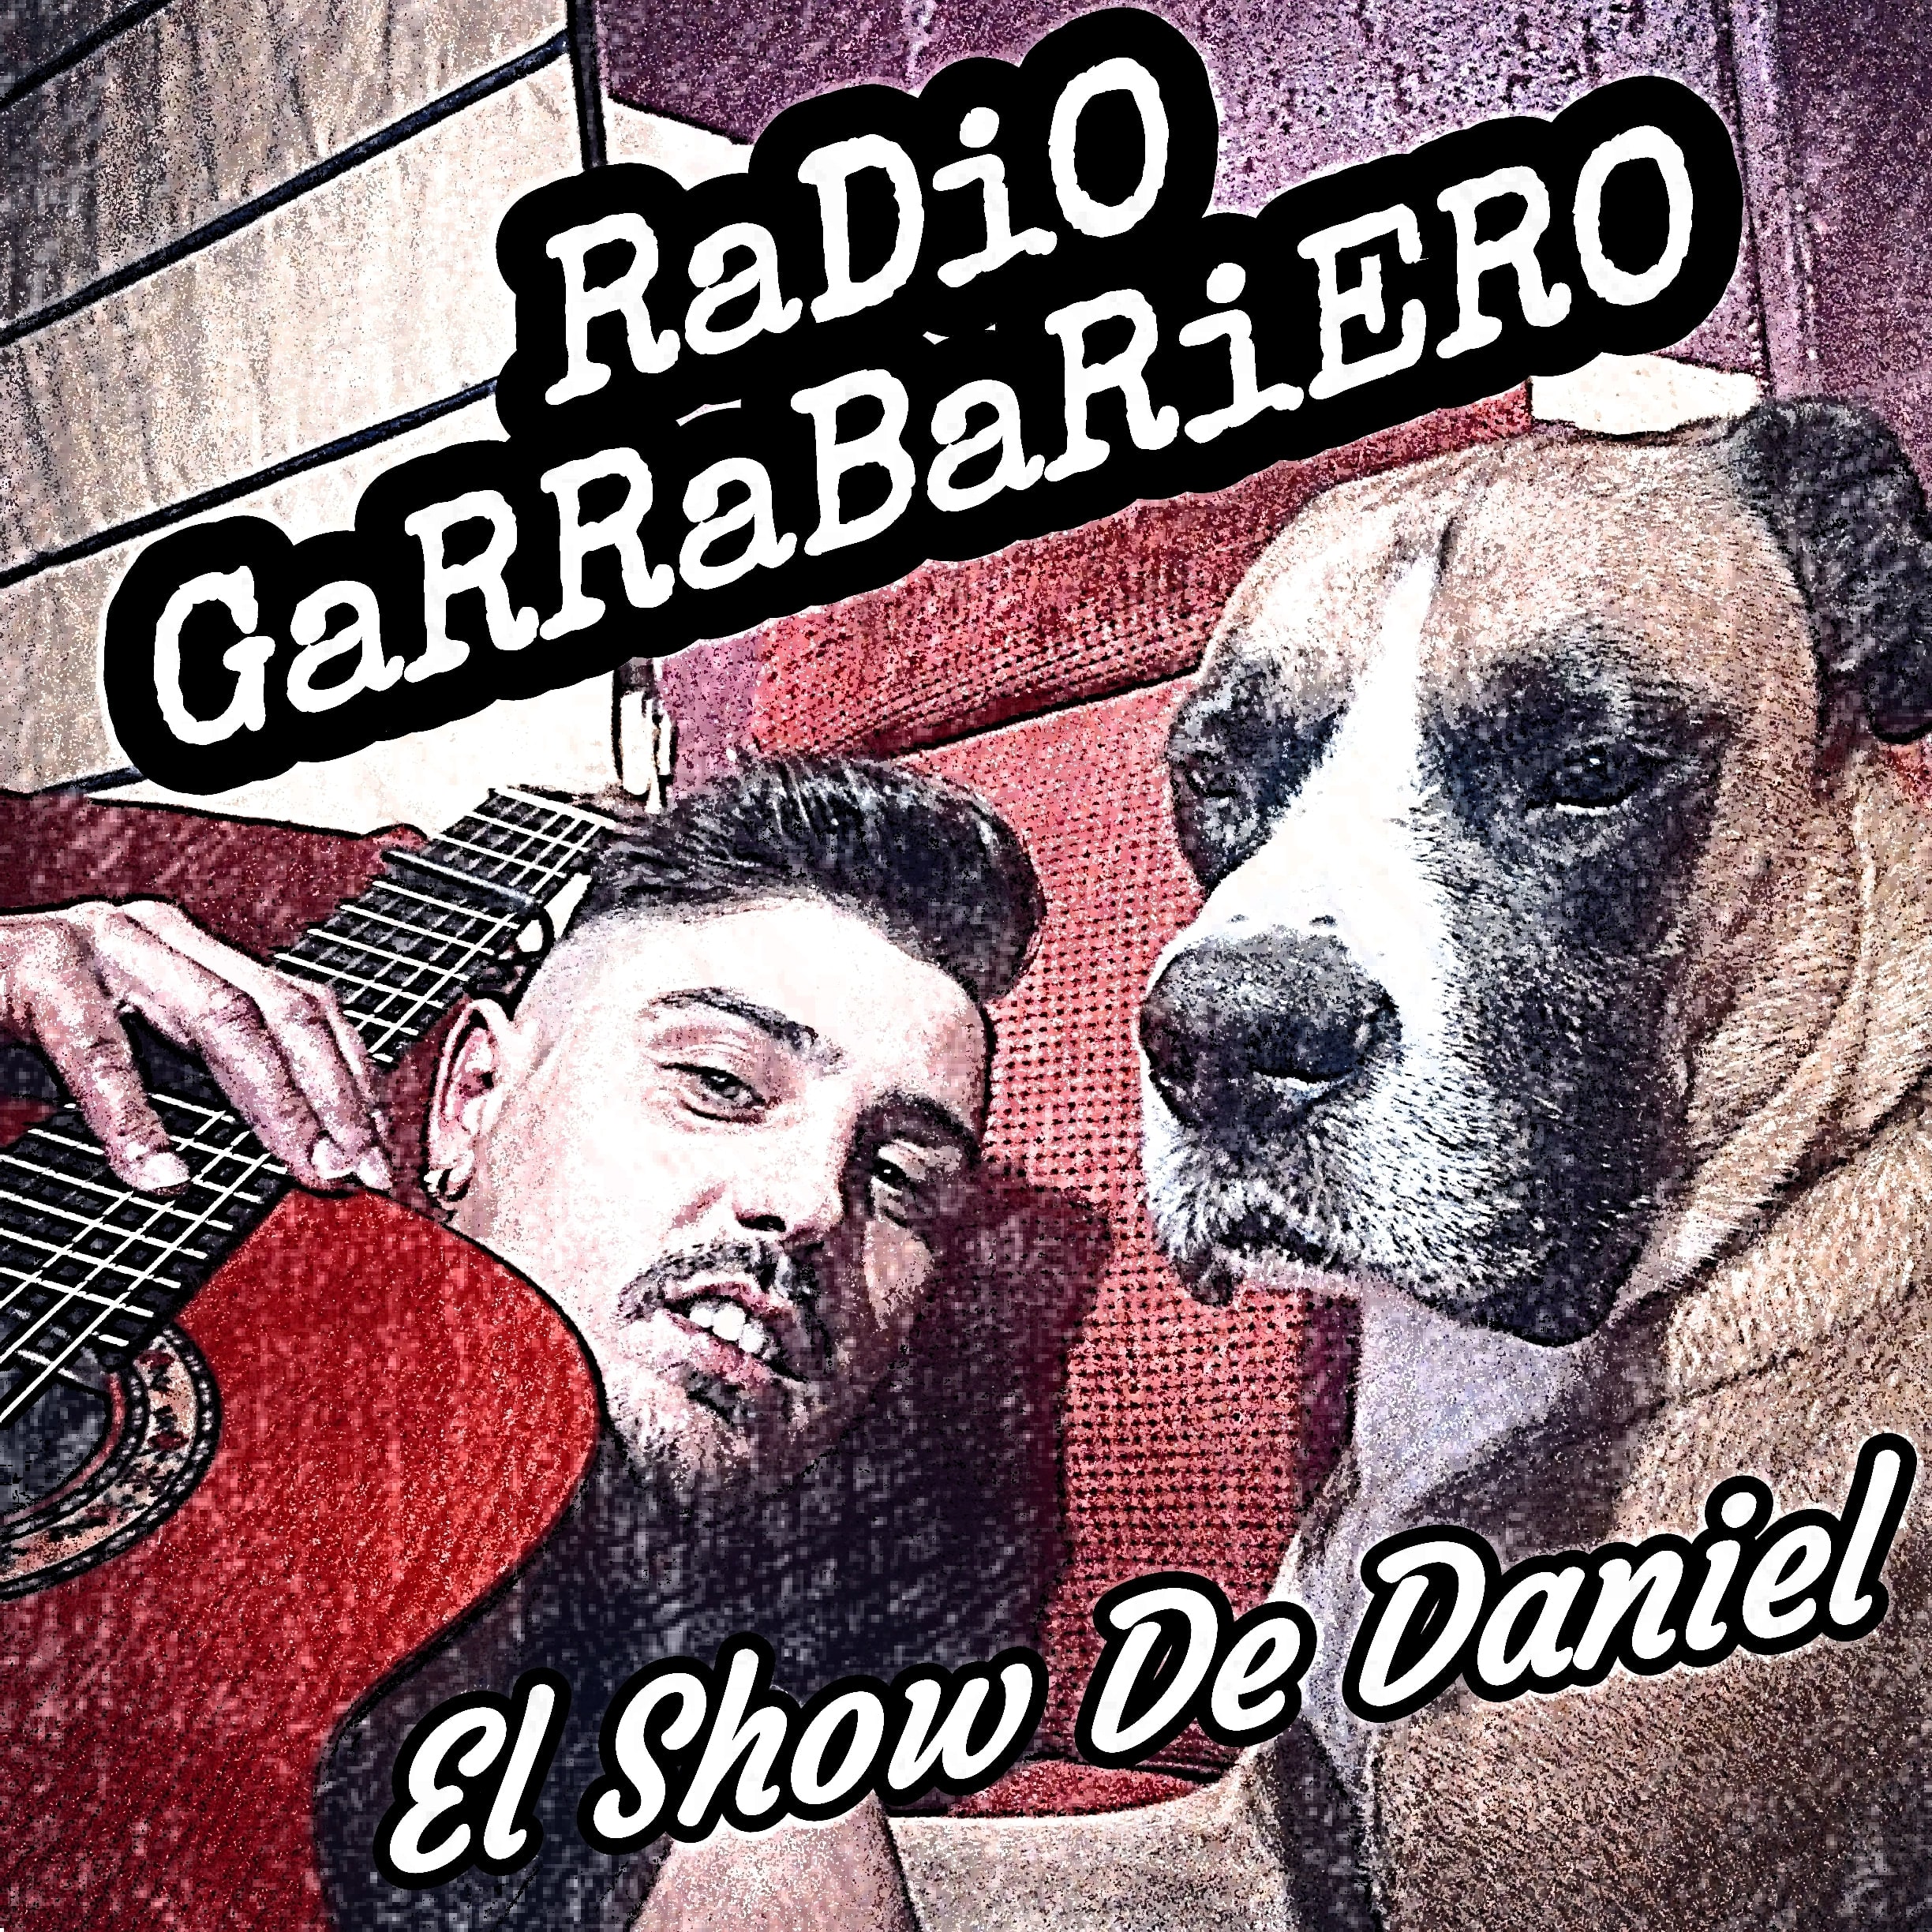 Radio Garrabarriero